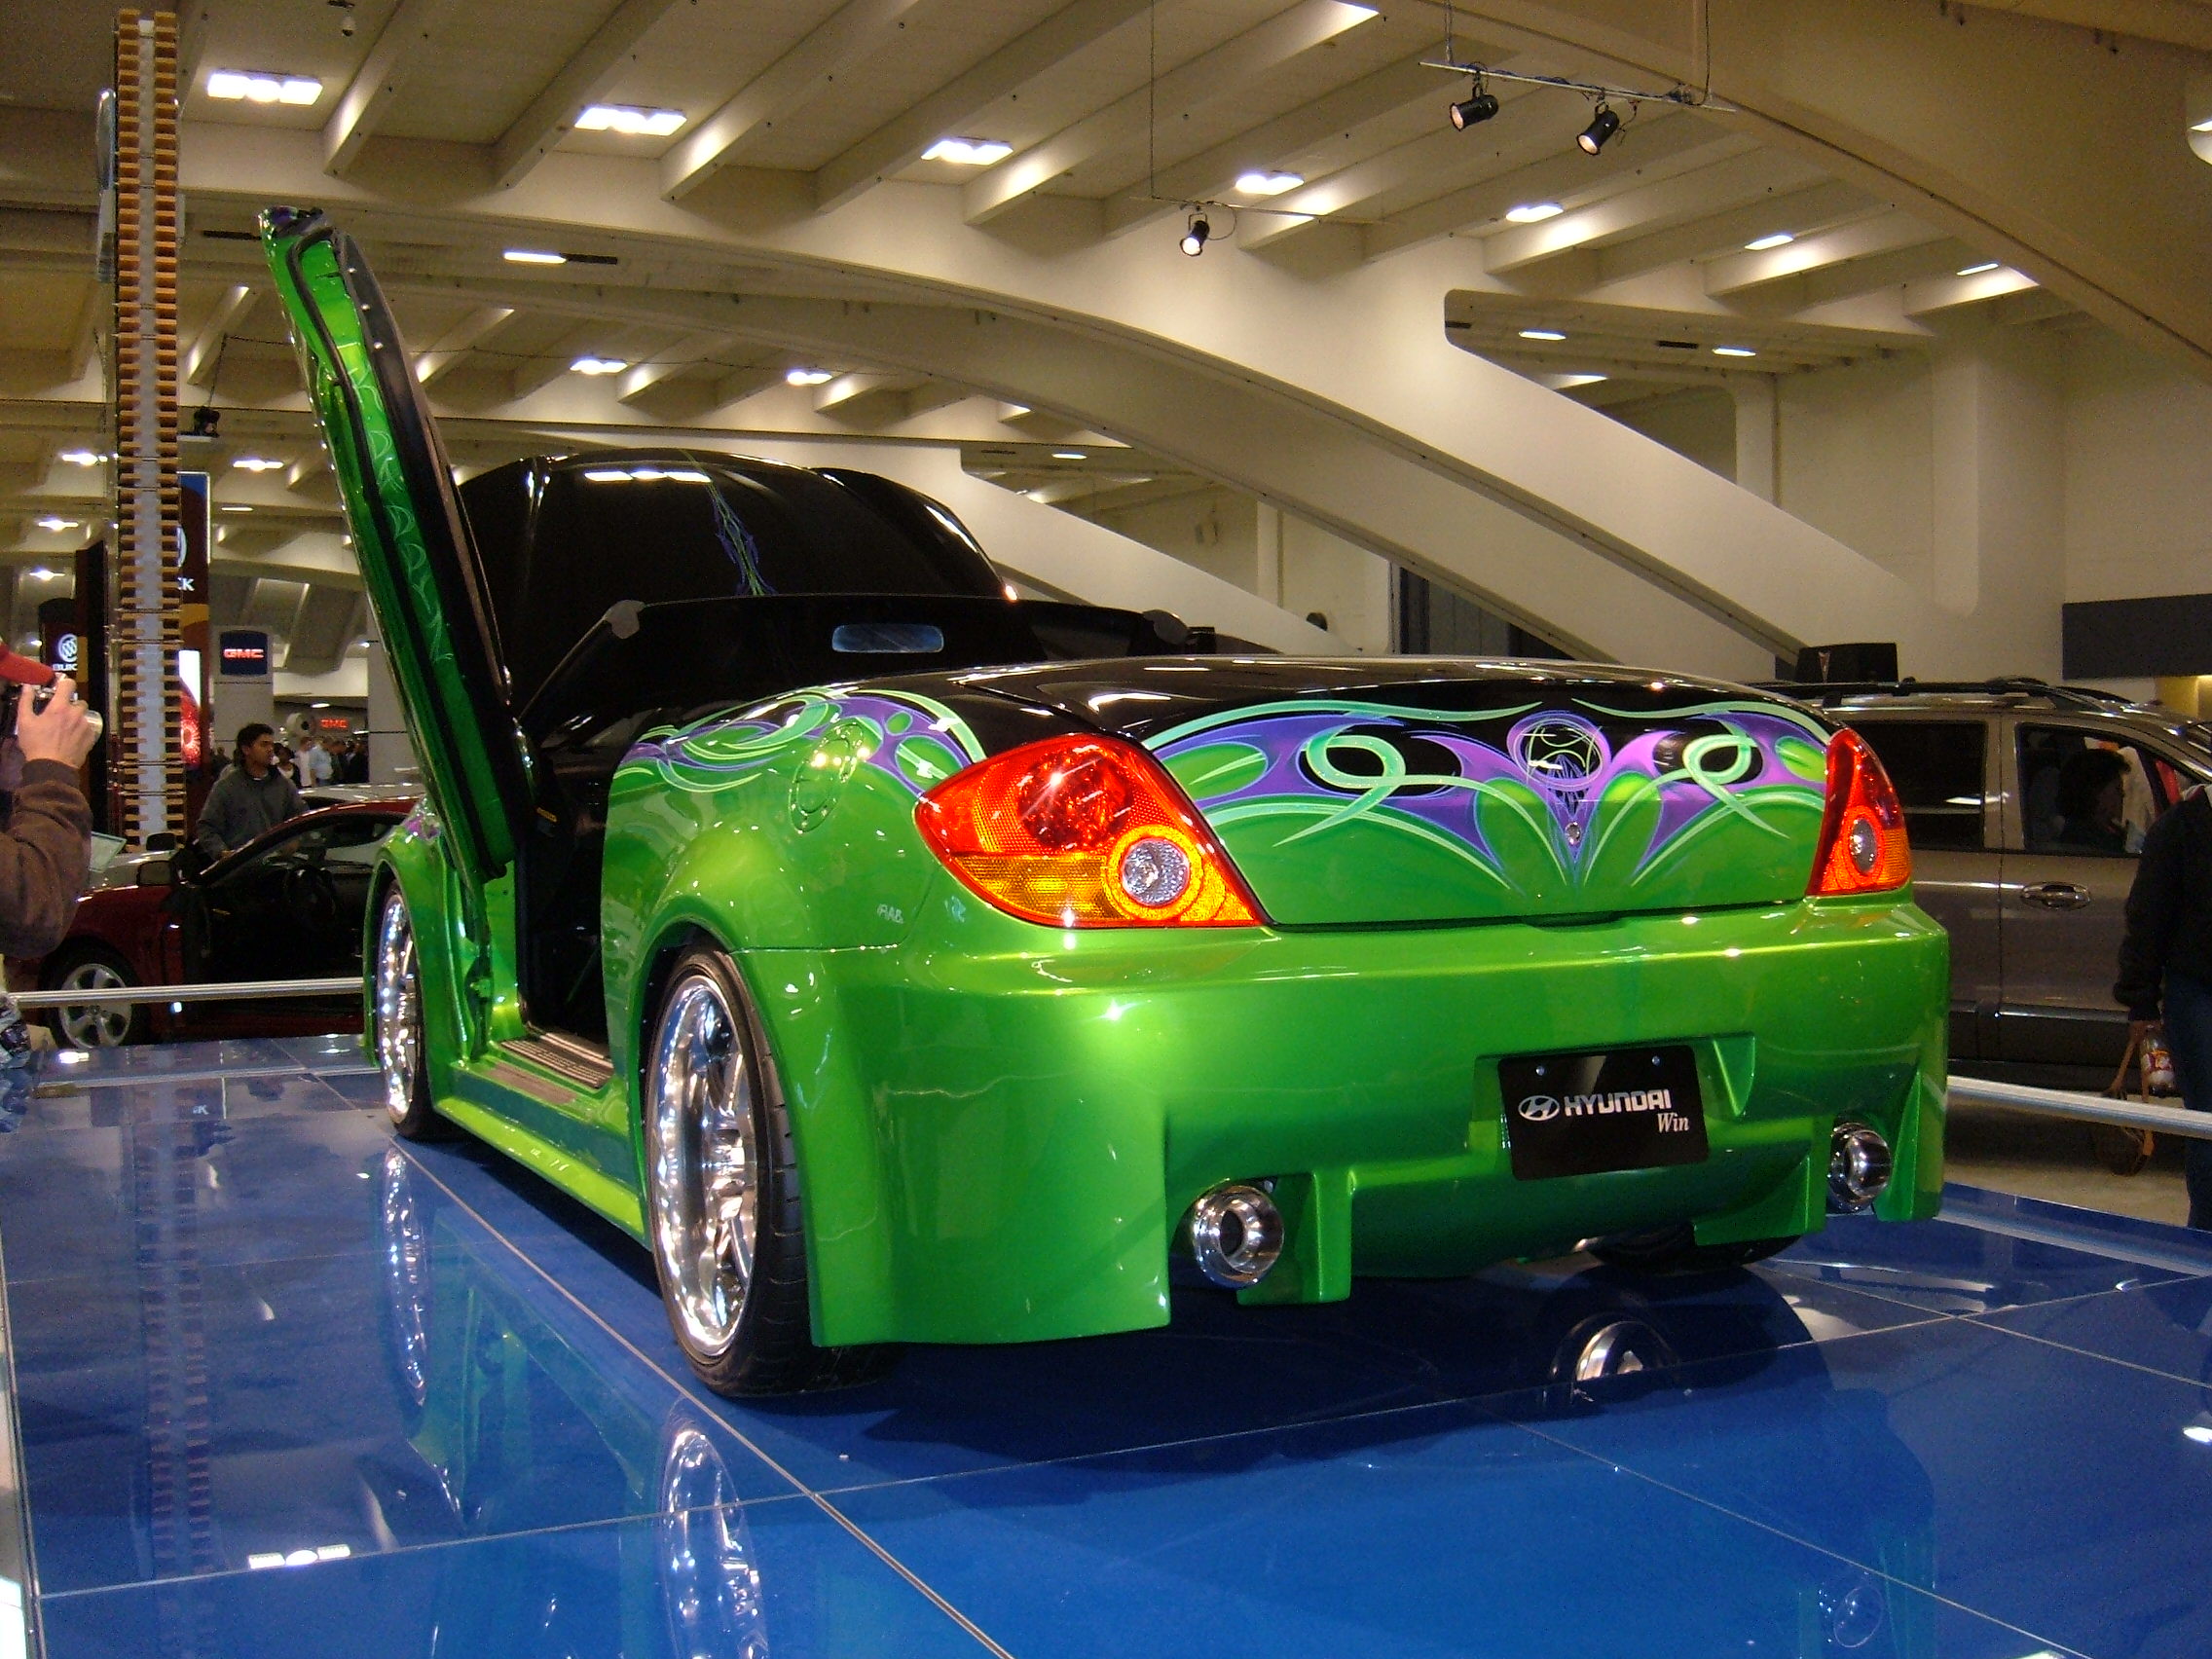 2005 customized green Hyundai Tiburon rear